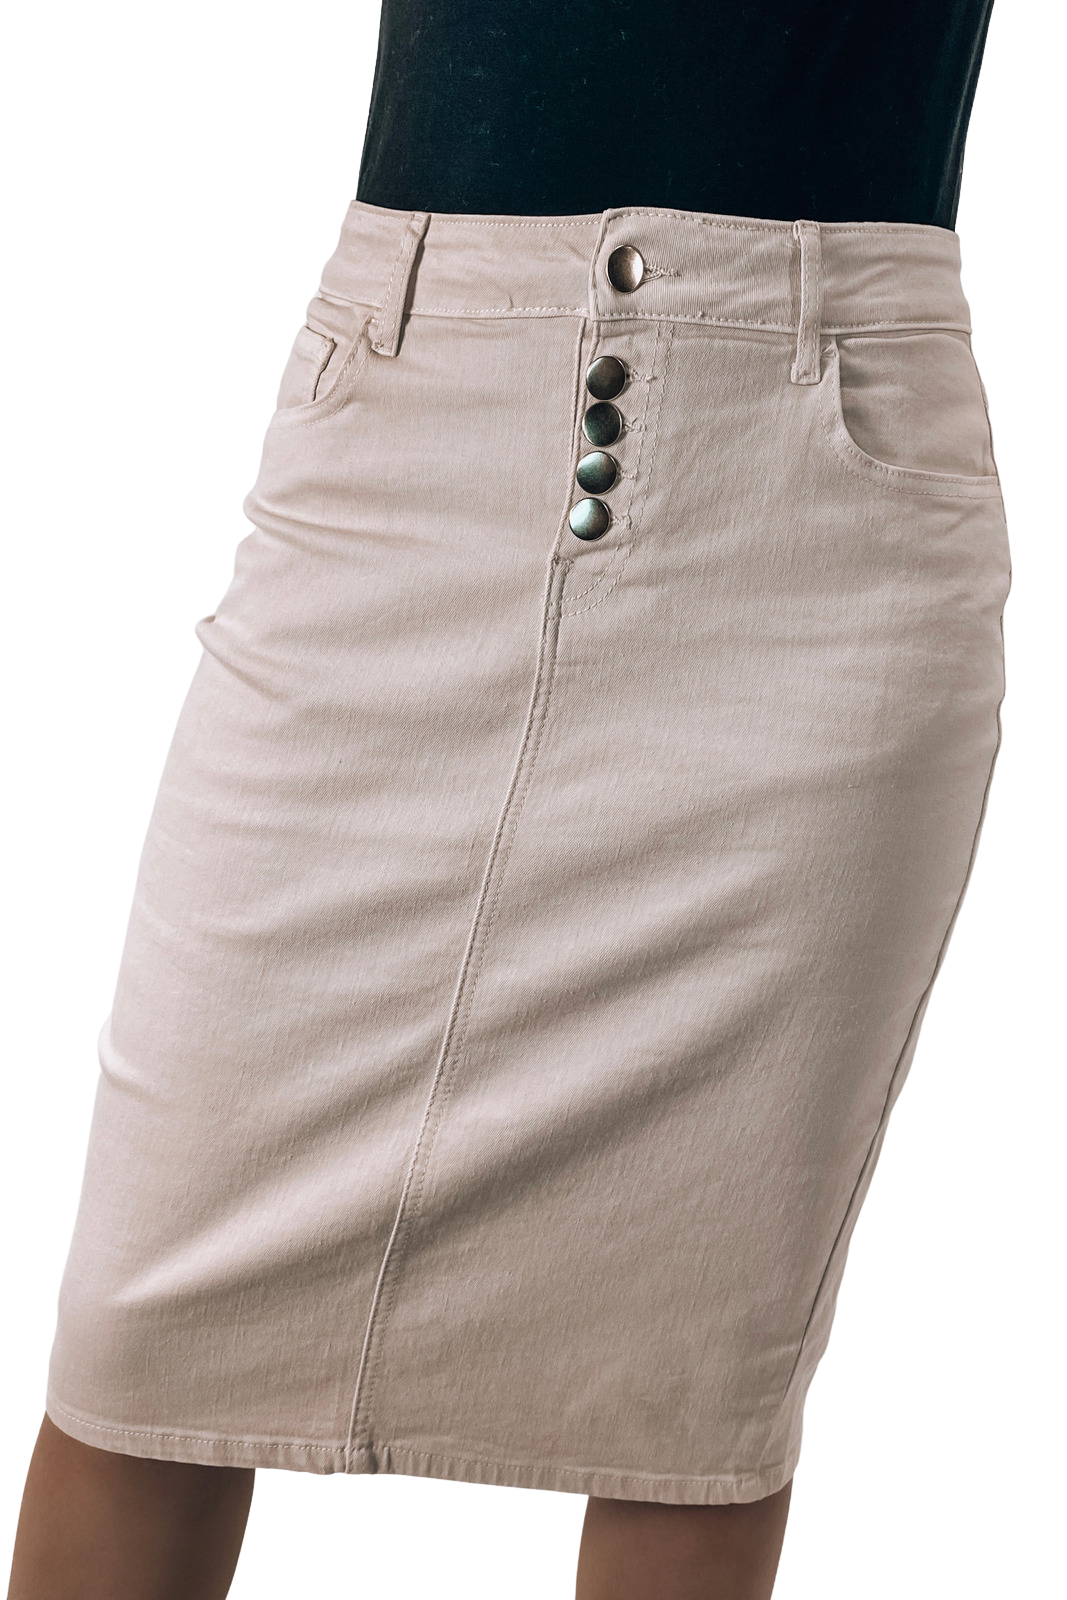 Sublime Denim Skirt in Ecru - FINAL SALE